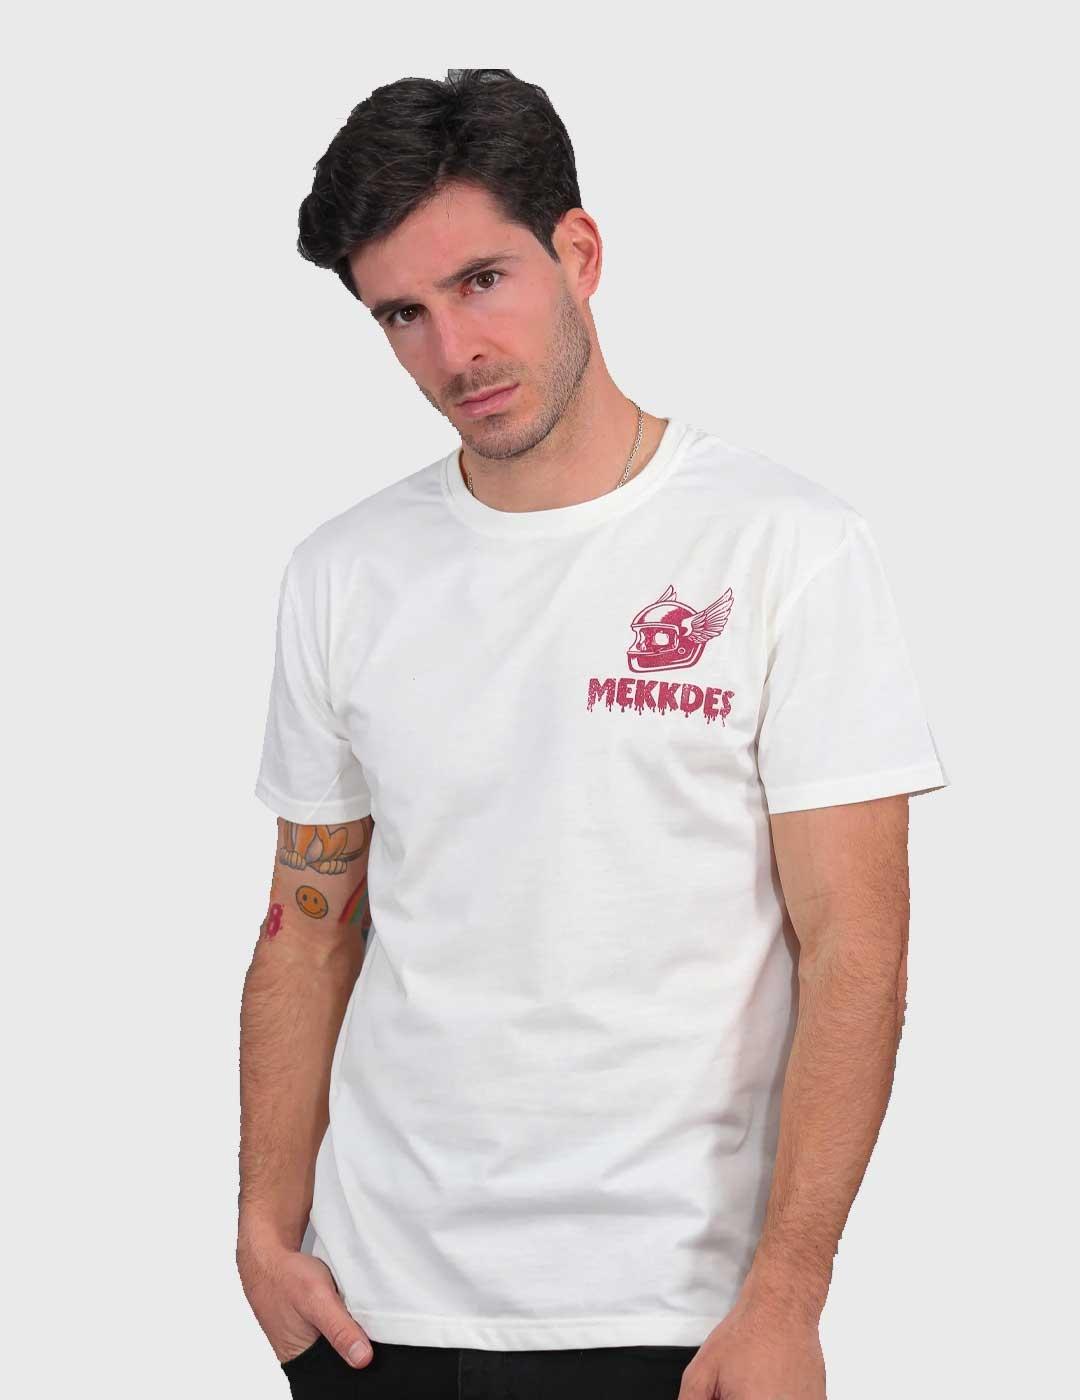 Camiseta Mekkdes Winged Helmet blanca para hombre